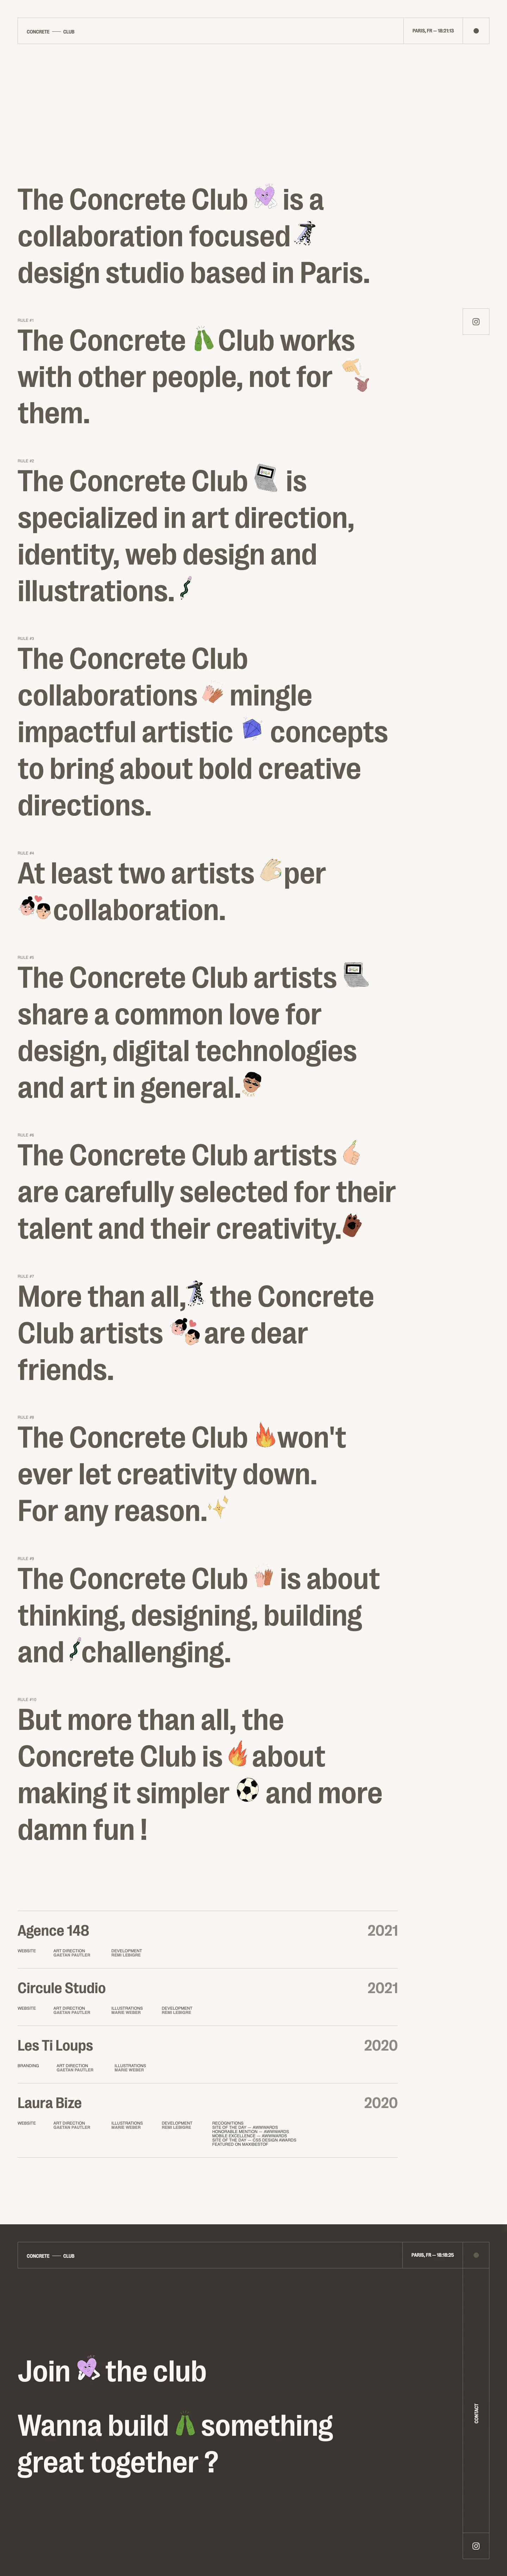 Concrete Club Studio Landing Page Example: The Concrete Club is a collaboration focused design studio based in Paris.